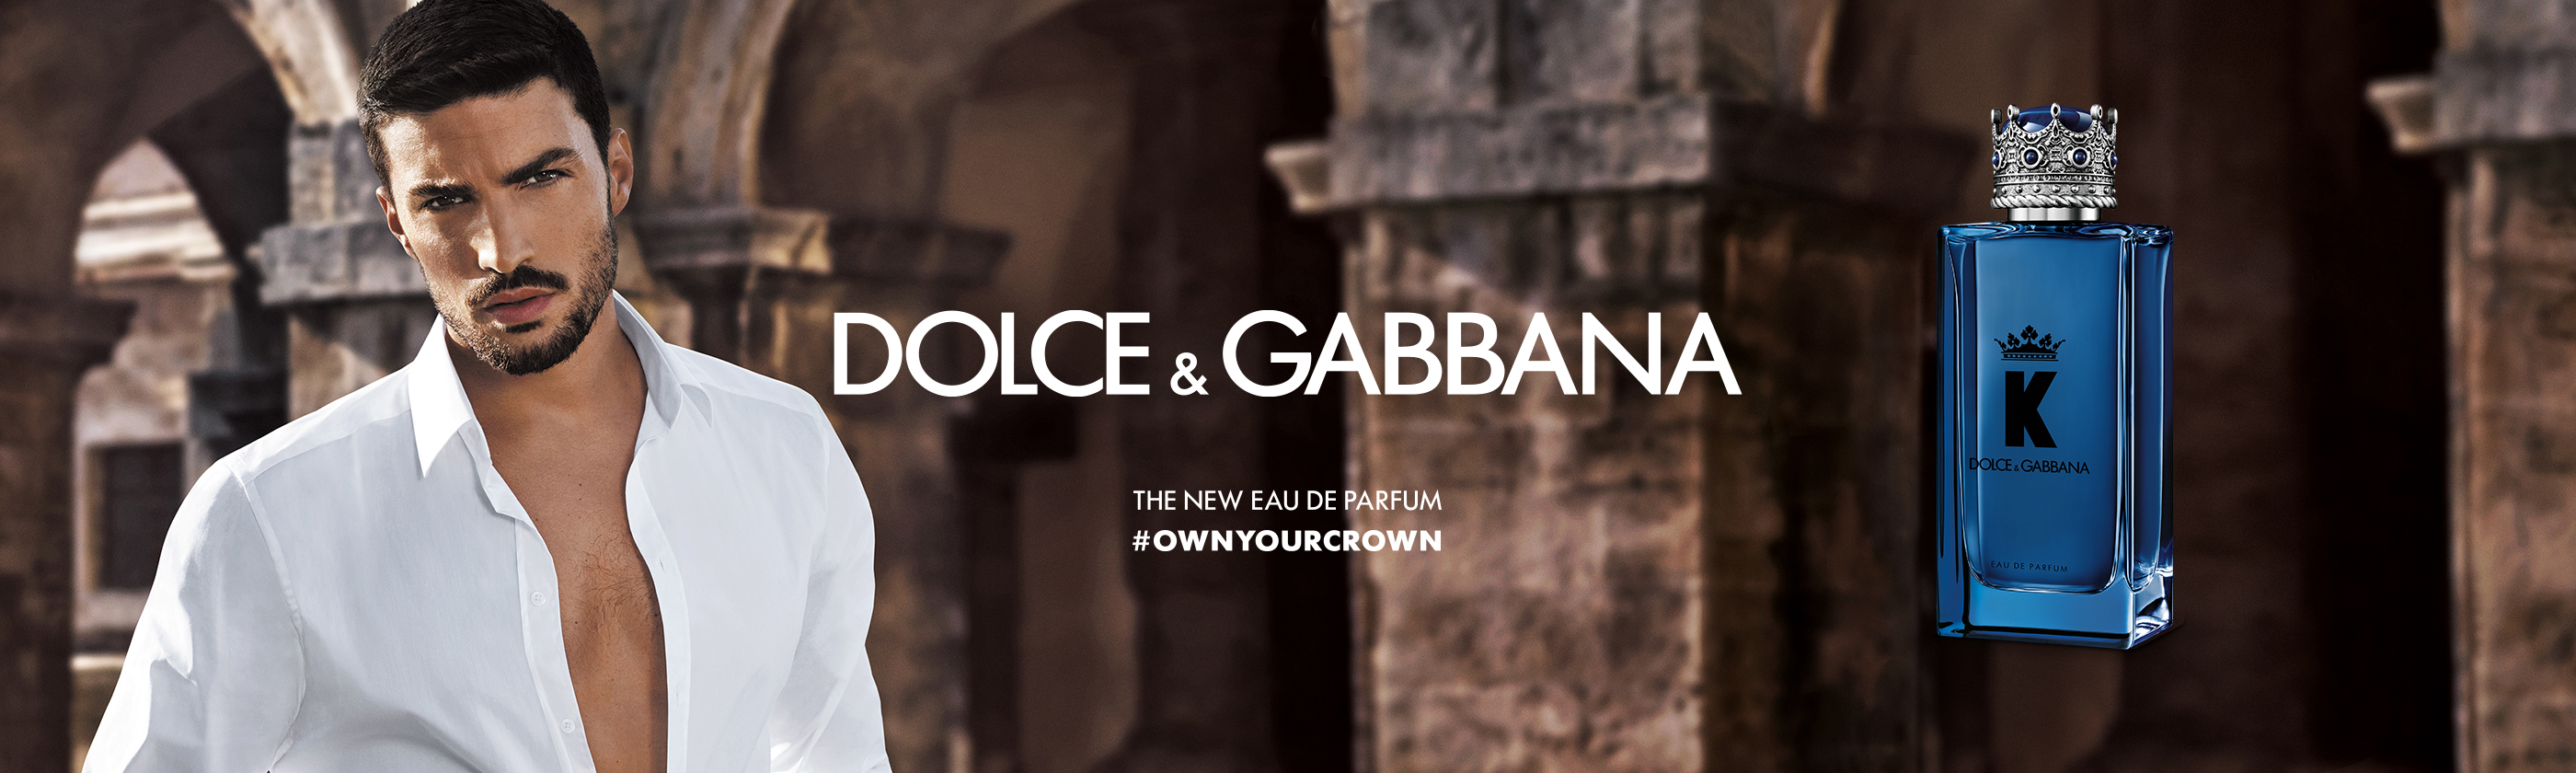 Dolce & Gabbana Beauty | D&G Fragrances | Next